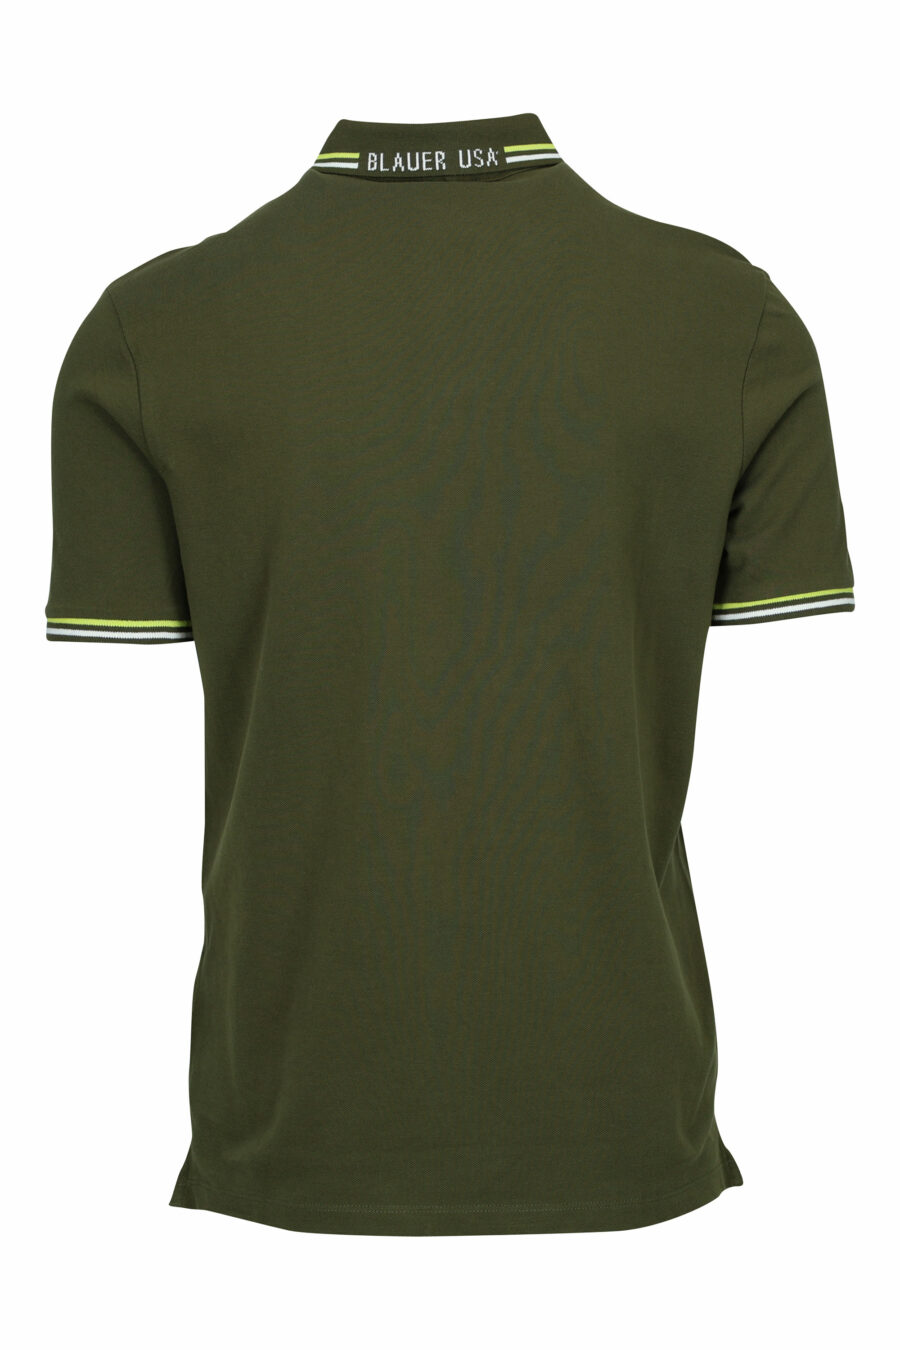 Polo vert militaire avec mini-logo - 8058610793272 1